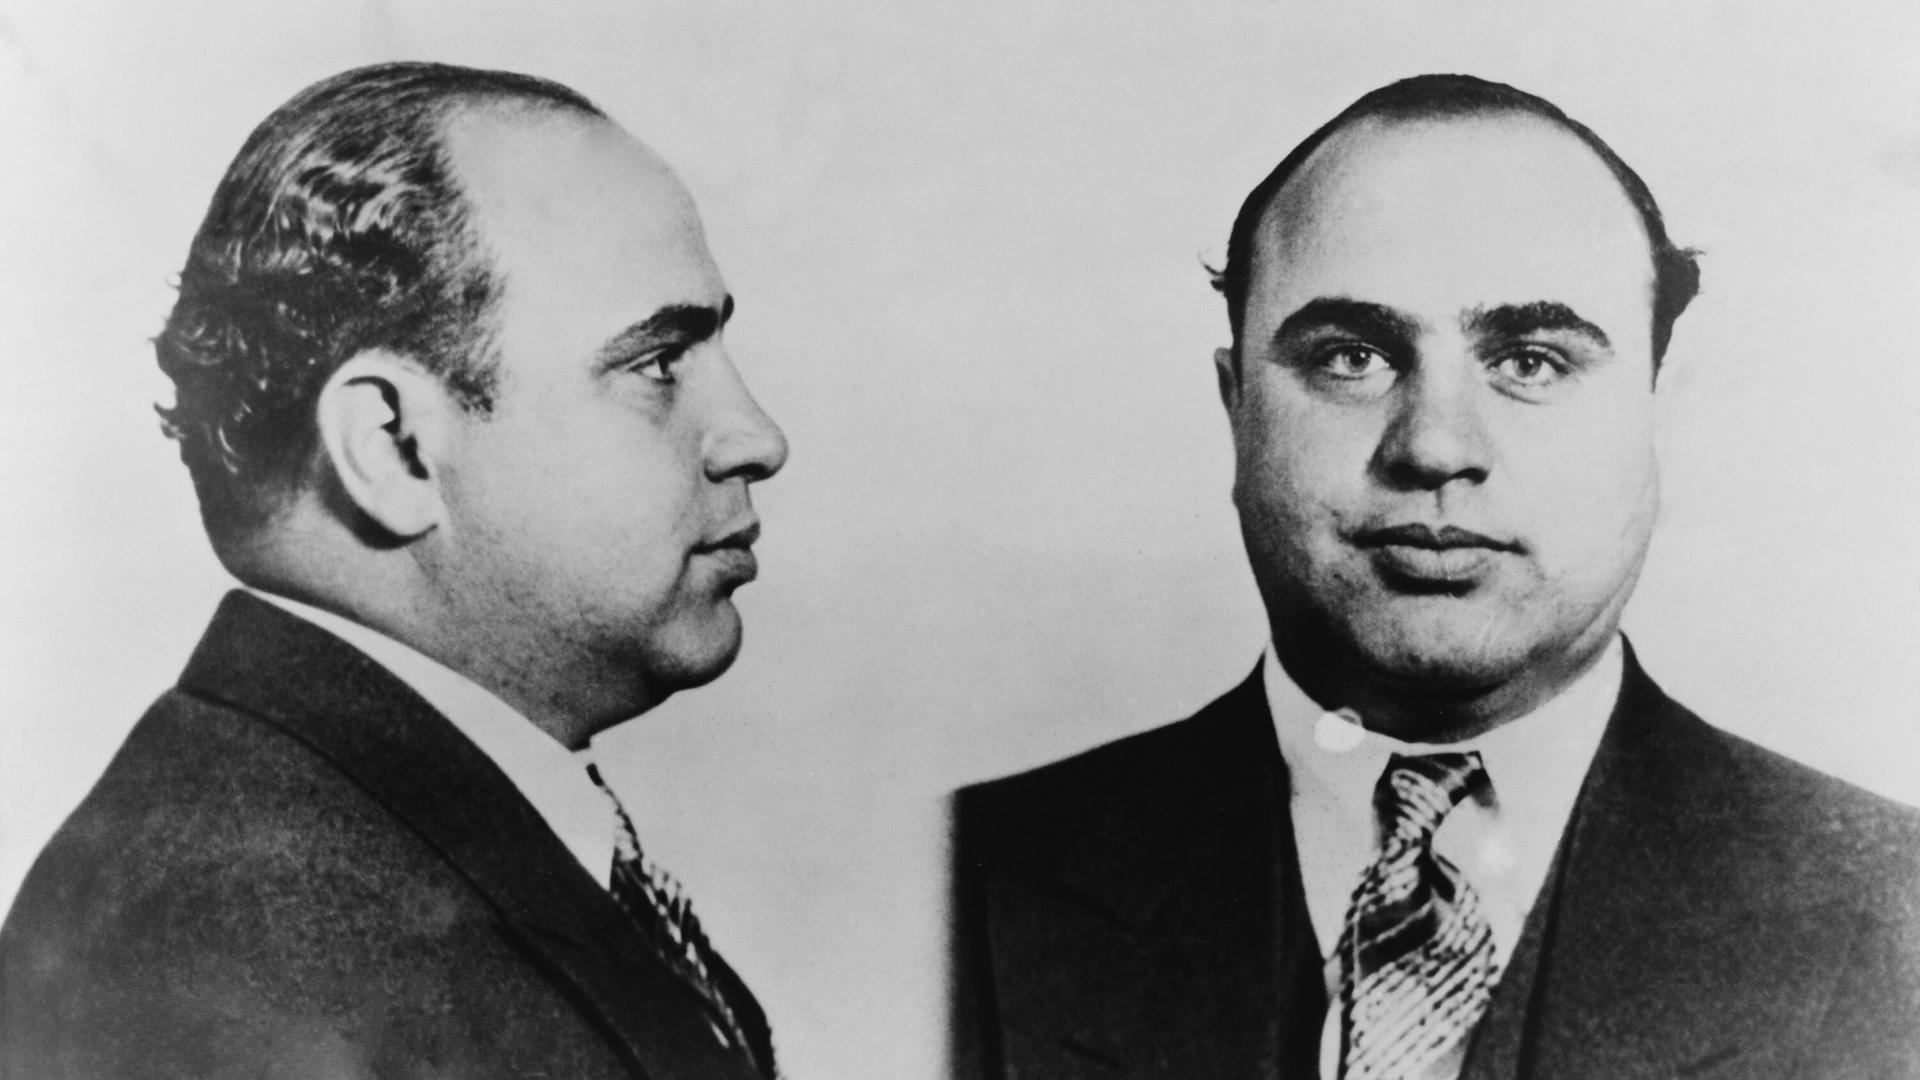 Mugshot  des auch Scarface genannten, italoamerikanischen Gangster-Bosses  Al Capone